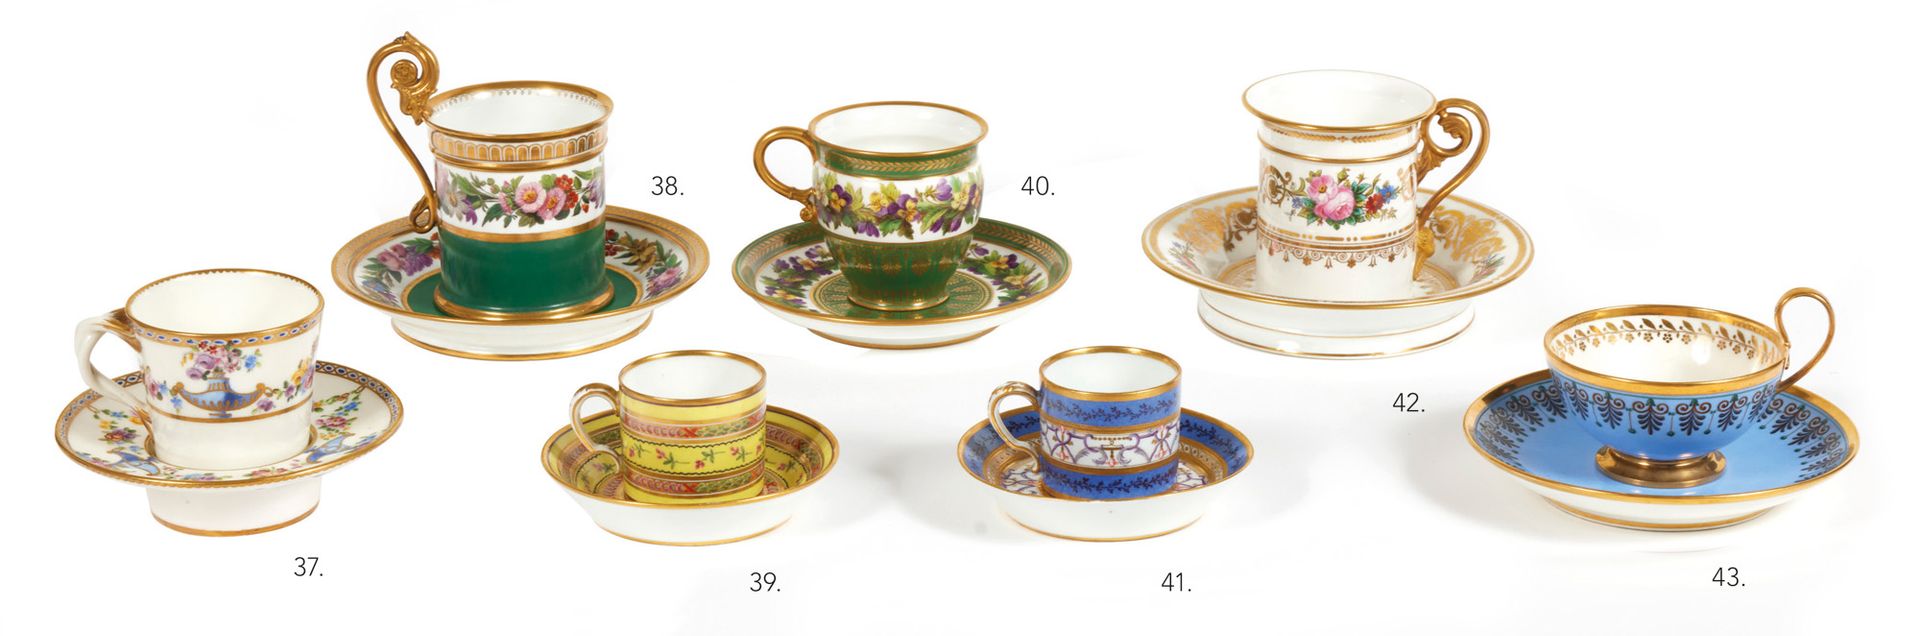 SEVRES 斯维尔
瓷杯和瓷碟，玛瑙蓝底，边缘装饰有滚动的棕榈和金丝。
背面有标记，1821年。
19世纪
高度：6,5厘米6.5厘米；直径：14.5厘米